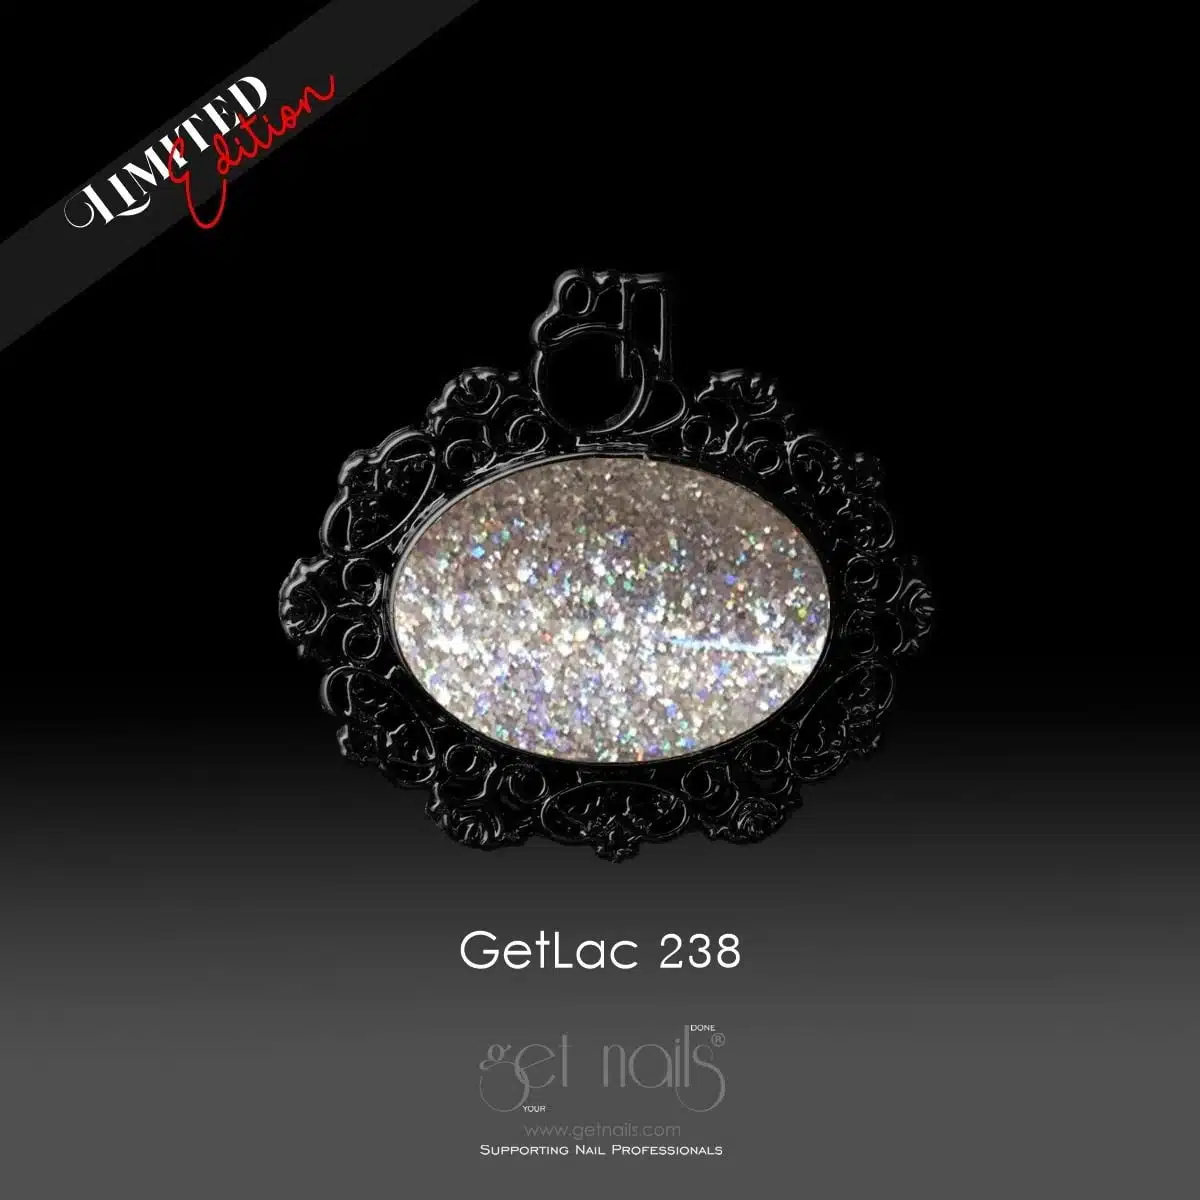 Get Nails Austria - GetLac 238 15g